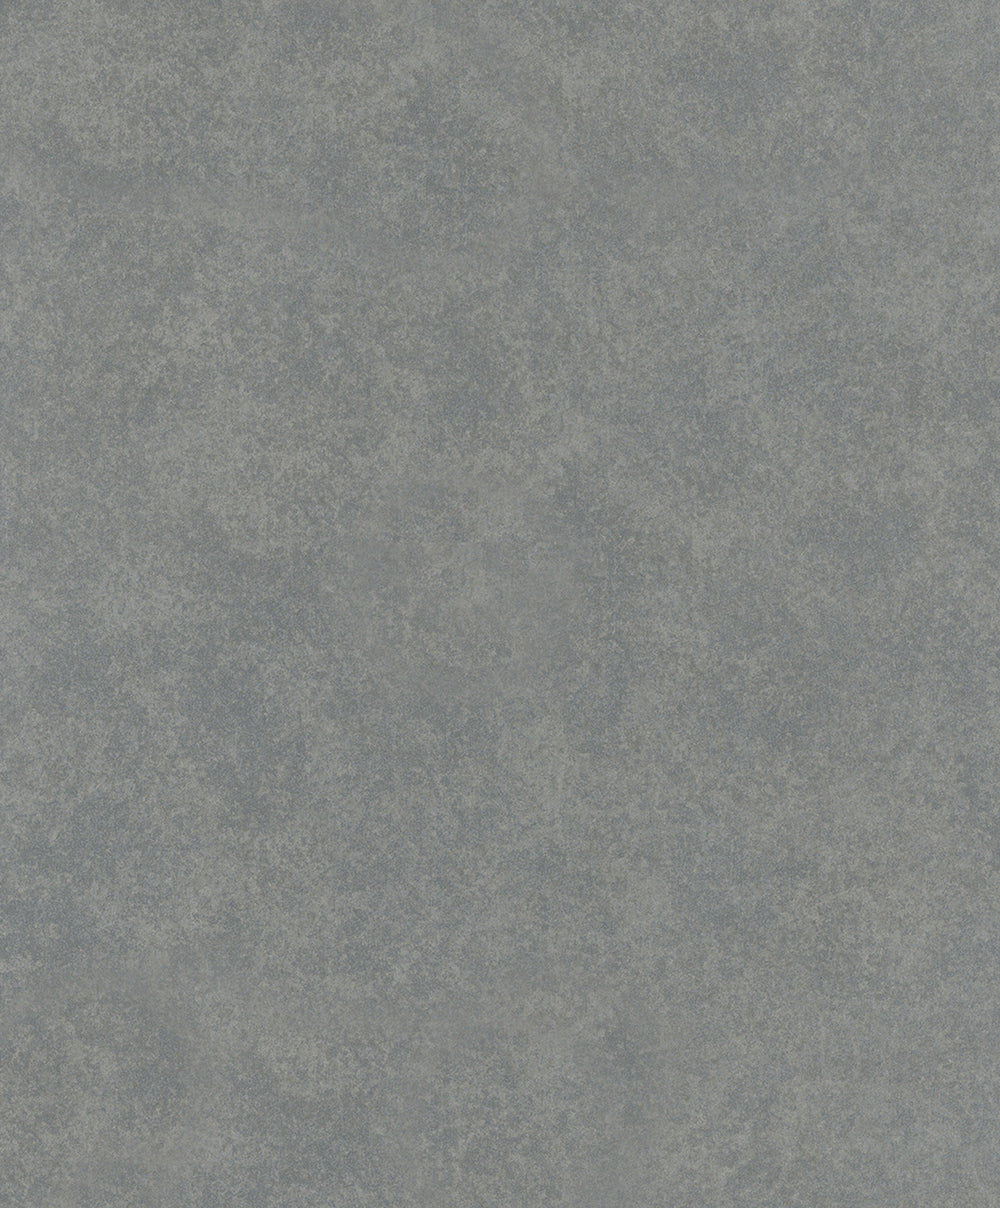 Habitat - Mottled Plain plain wallpaper Marburg Roll Dark Grey  34033